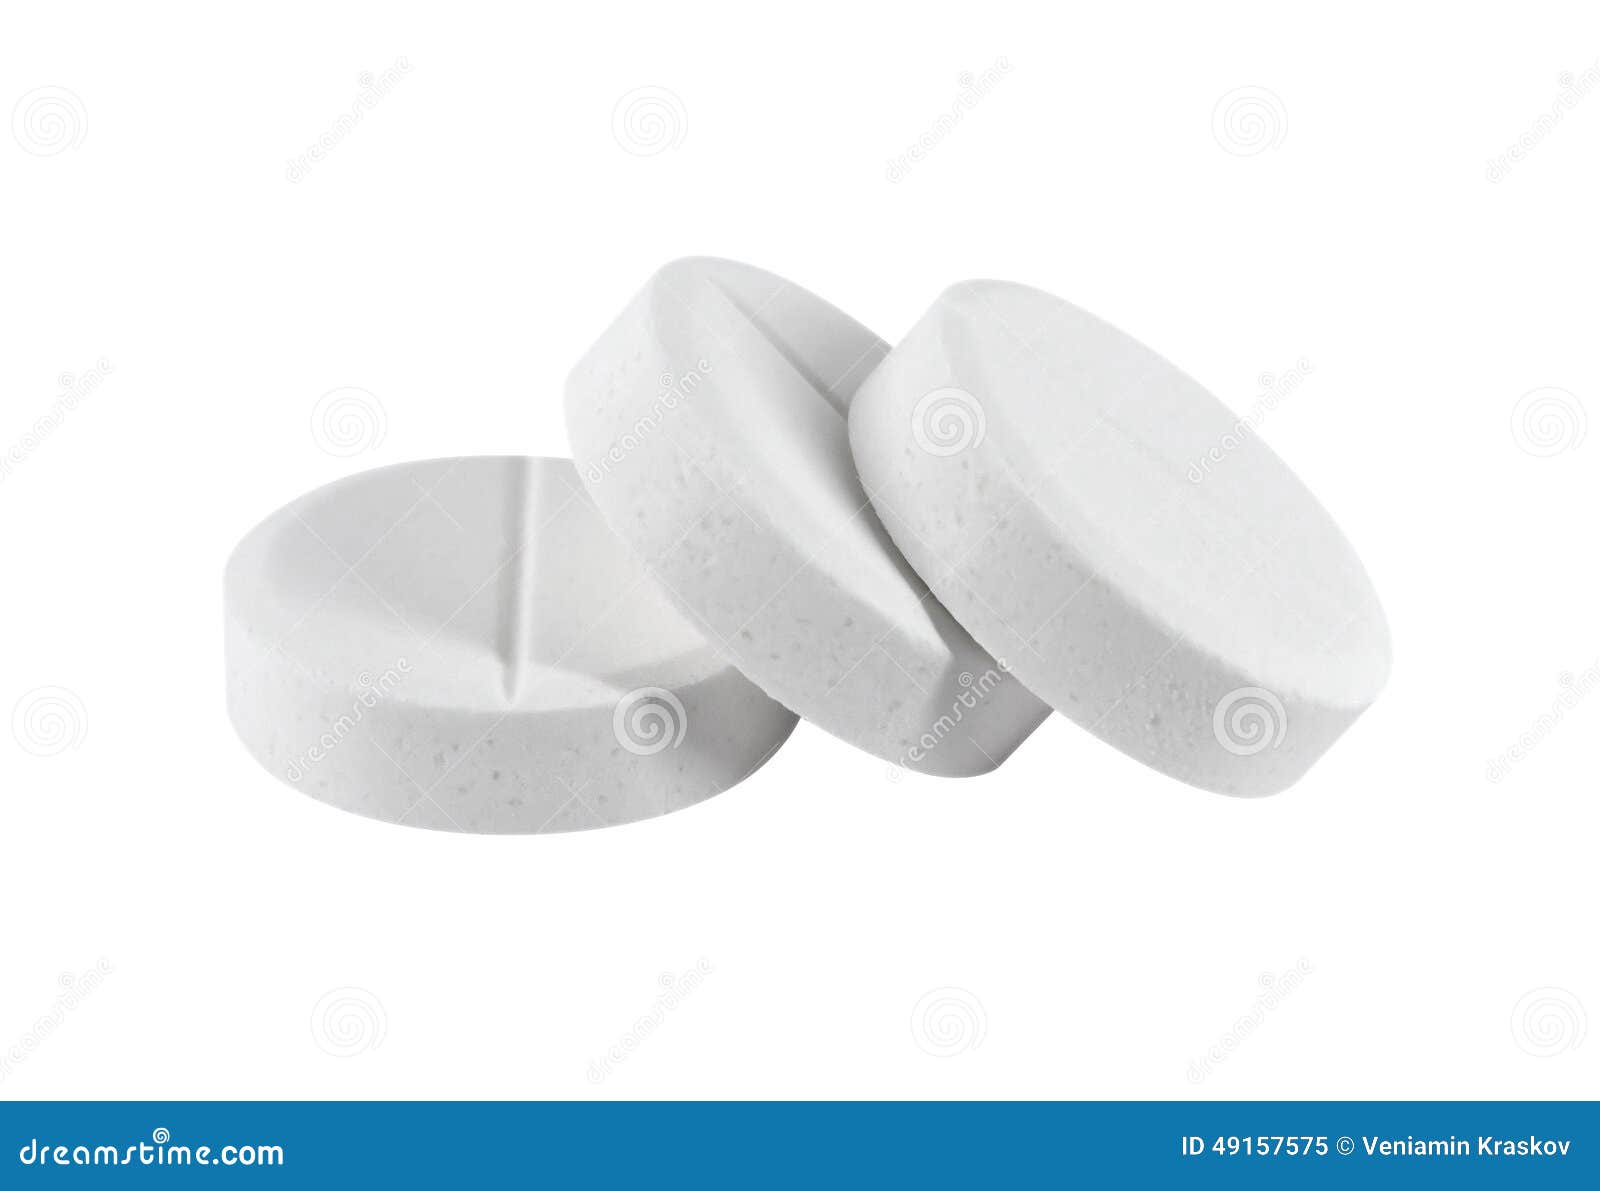 Três tabuletas de aspirin isolaram-se no branco Trajeto de grampeamento incluído